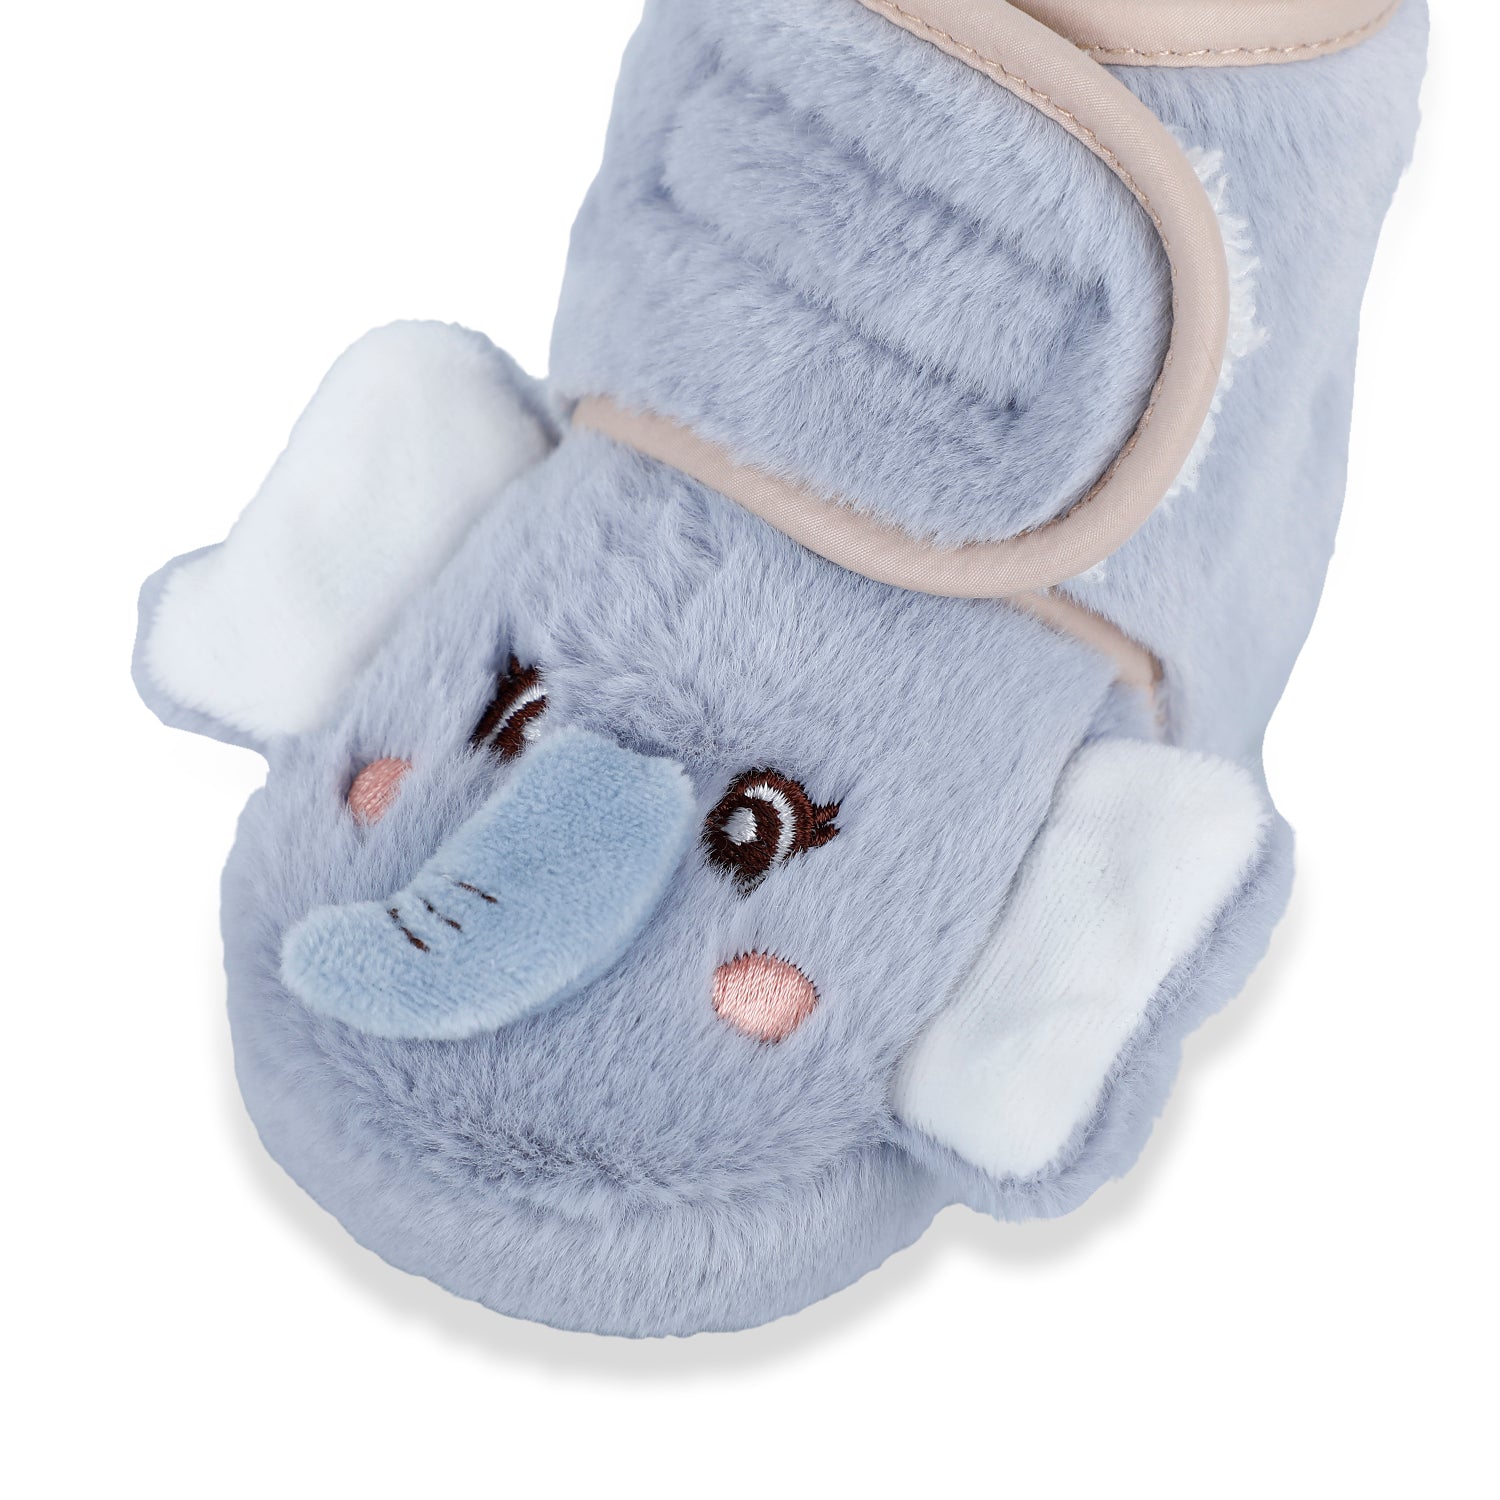 Baby Moo 3D Elephant Cozy Soft Velcro Furry Booties - Blue - Baby Moo